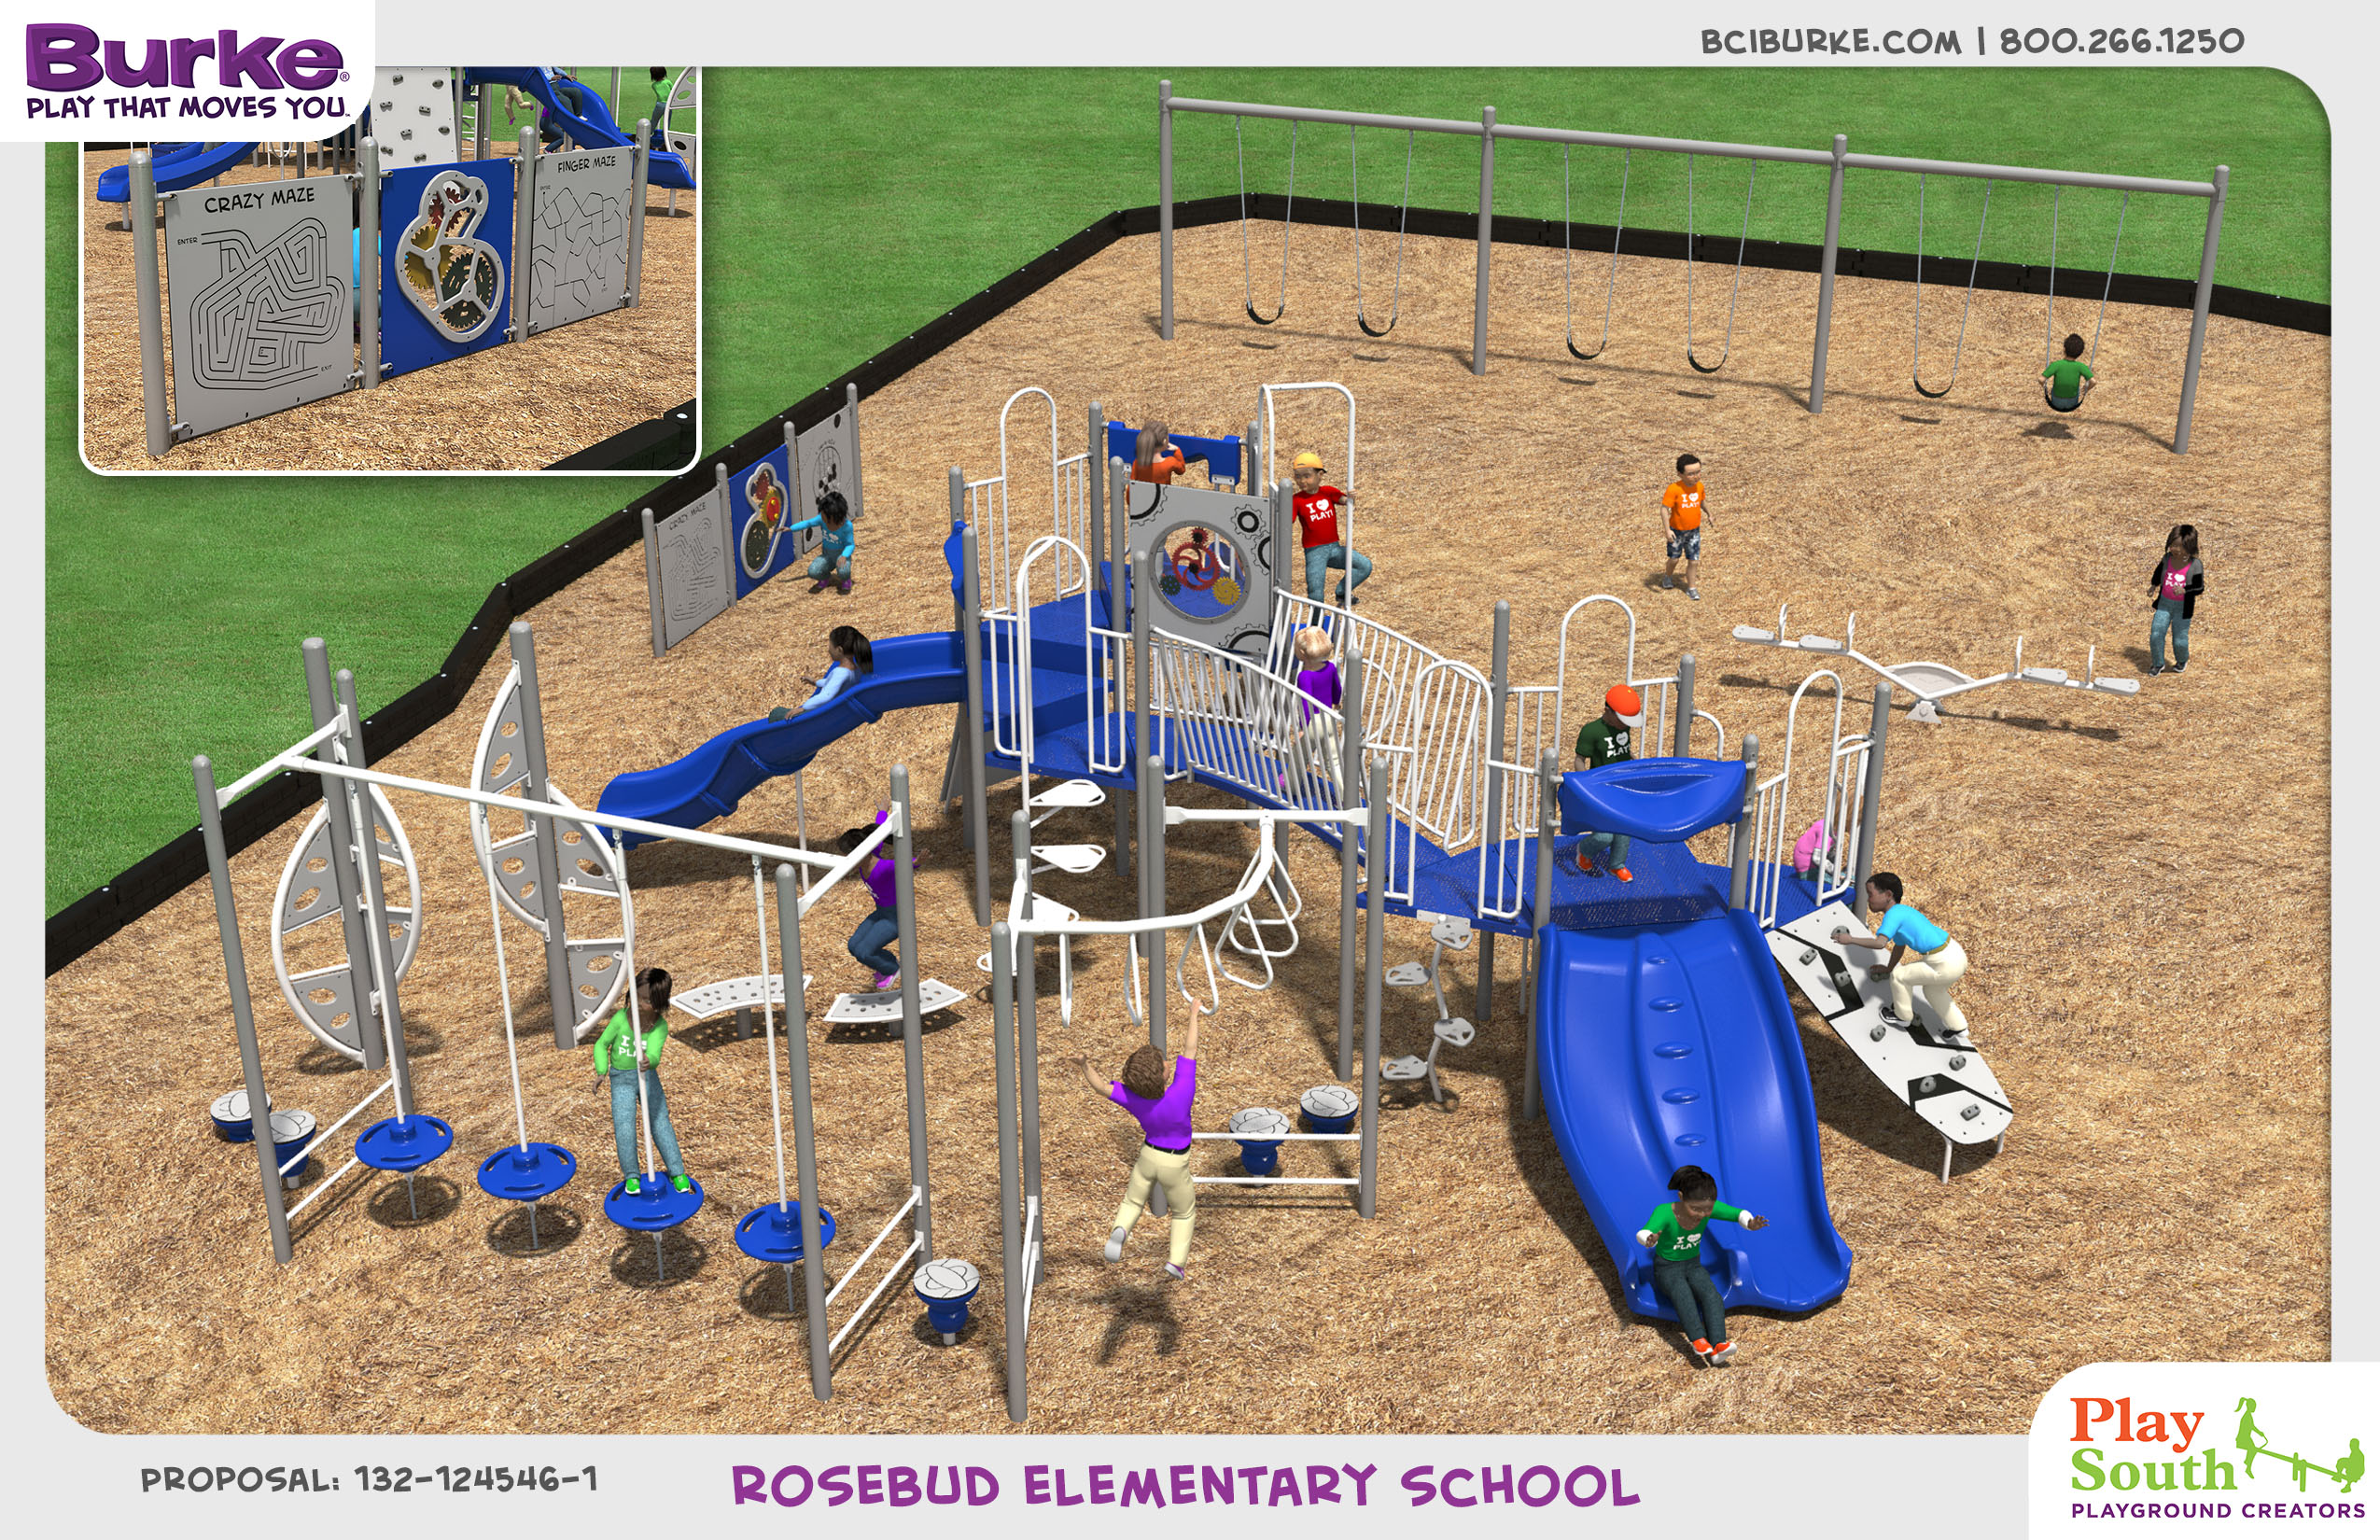 Rosebud Elementary PTA Rosebud Elementary School Playground Fundraiser